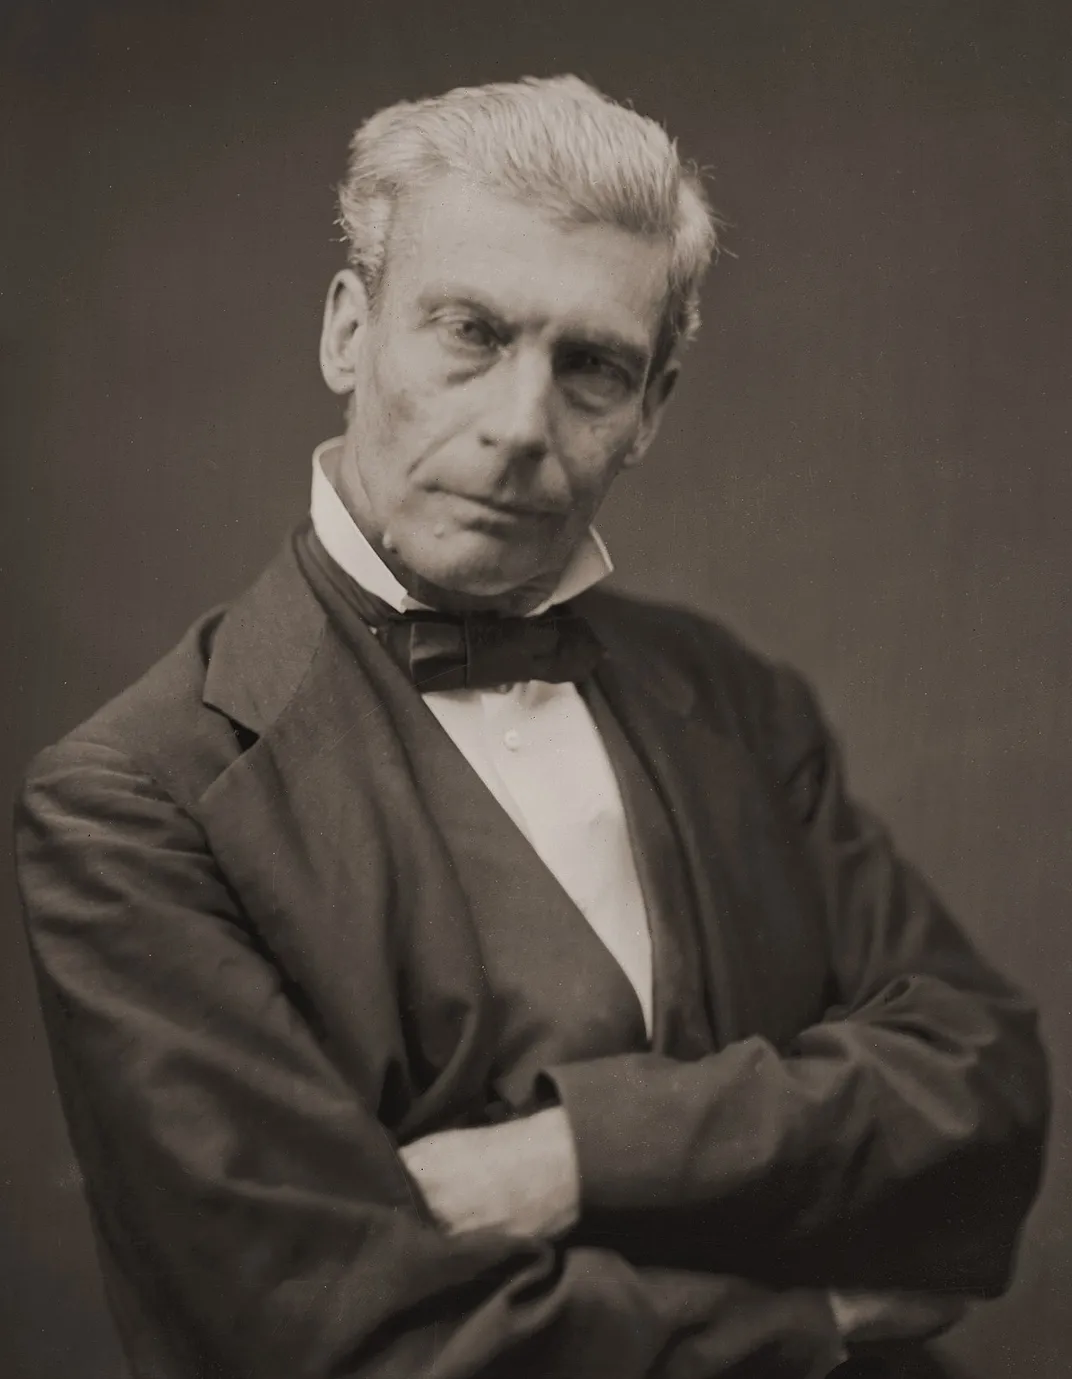 Felton's husband, William